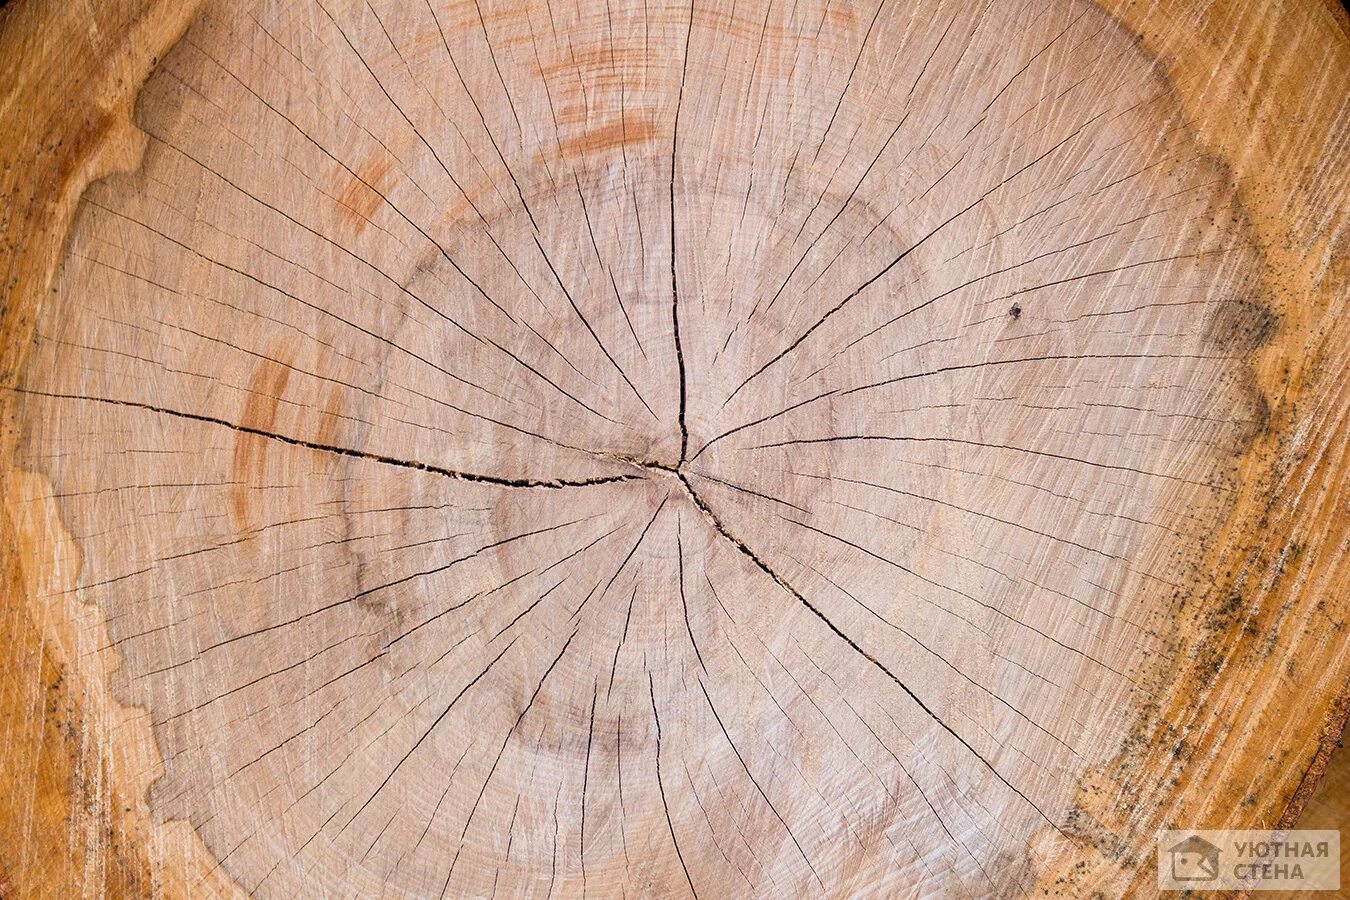 Браун Вуд (Brown Wood). Круглый спил дерева. Срез дерева. Красивый срез дерева.